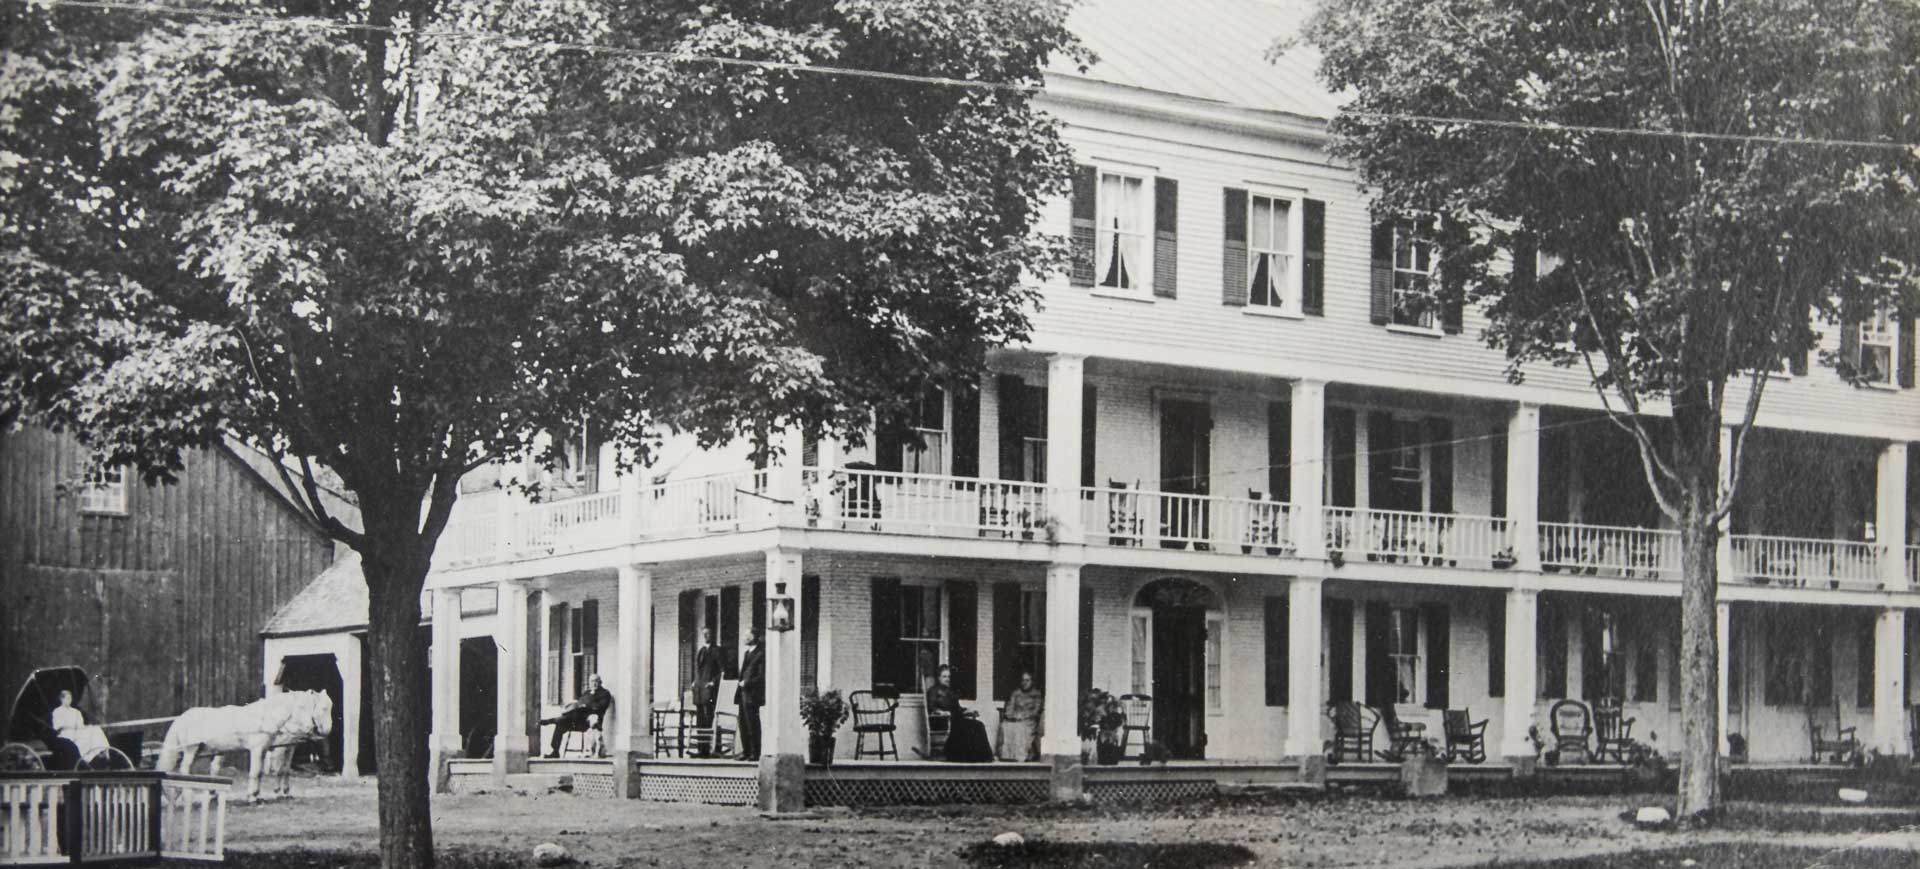 Historic black and white photo of the Grafton Inn